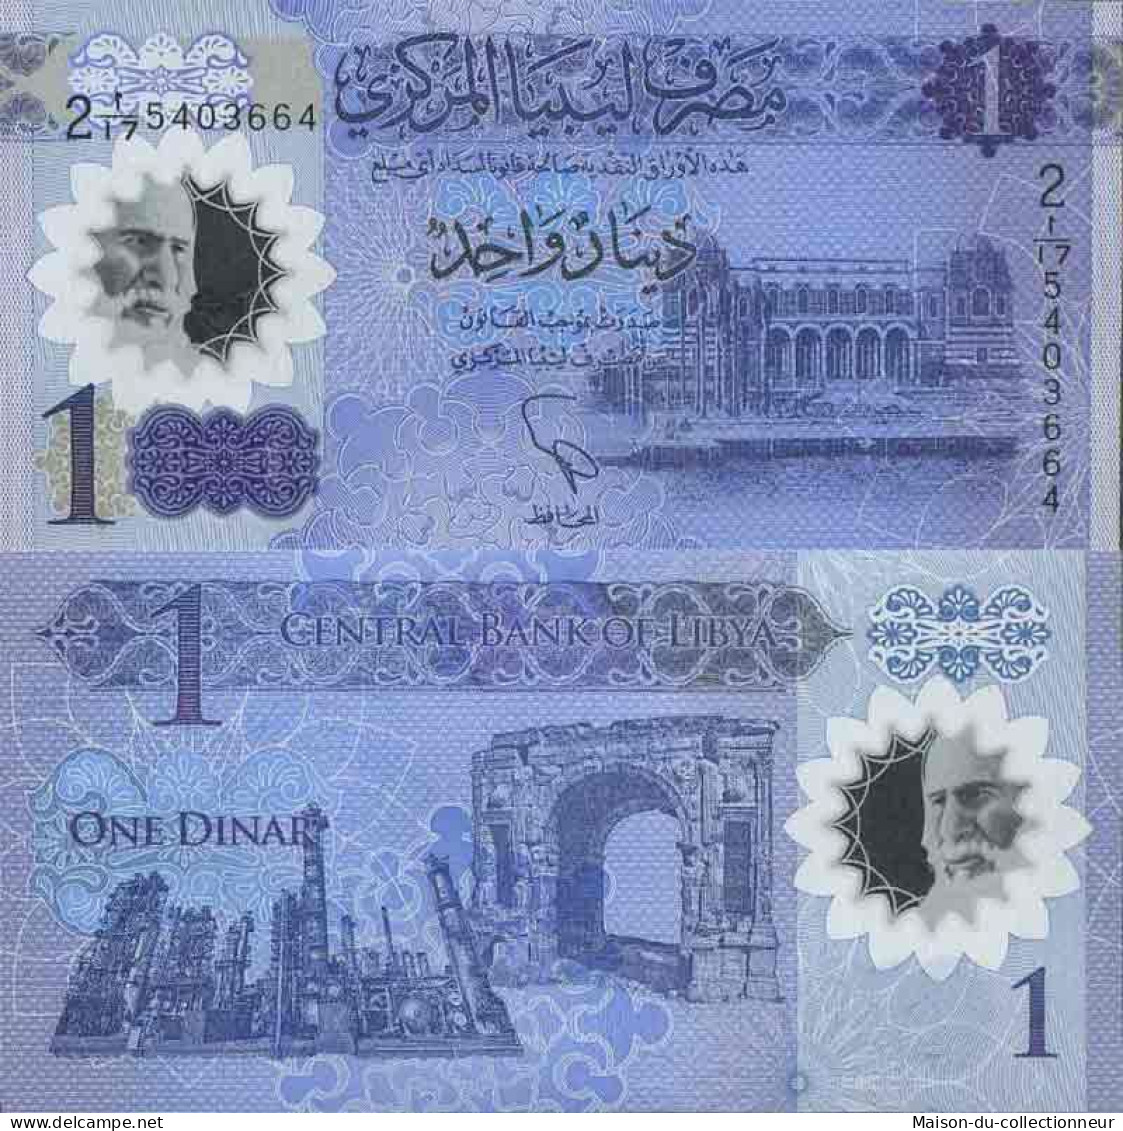 Billet De Banque Collection Libye - W N° 85 - 1 Dinar - Libye